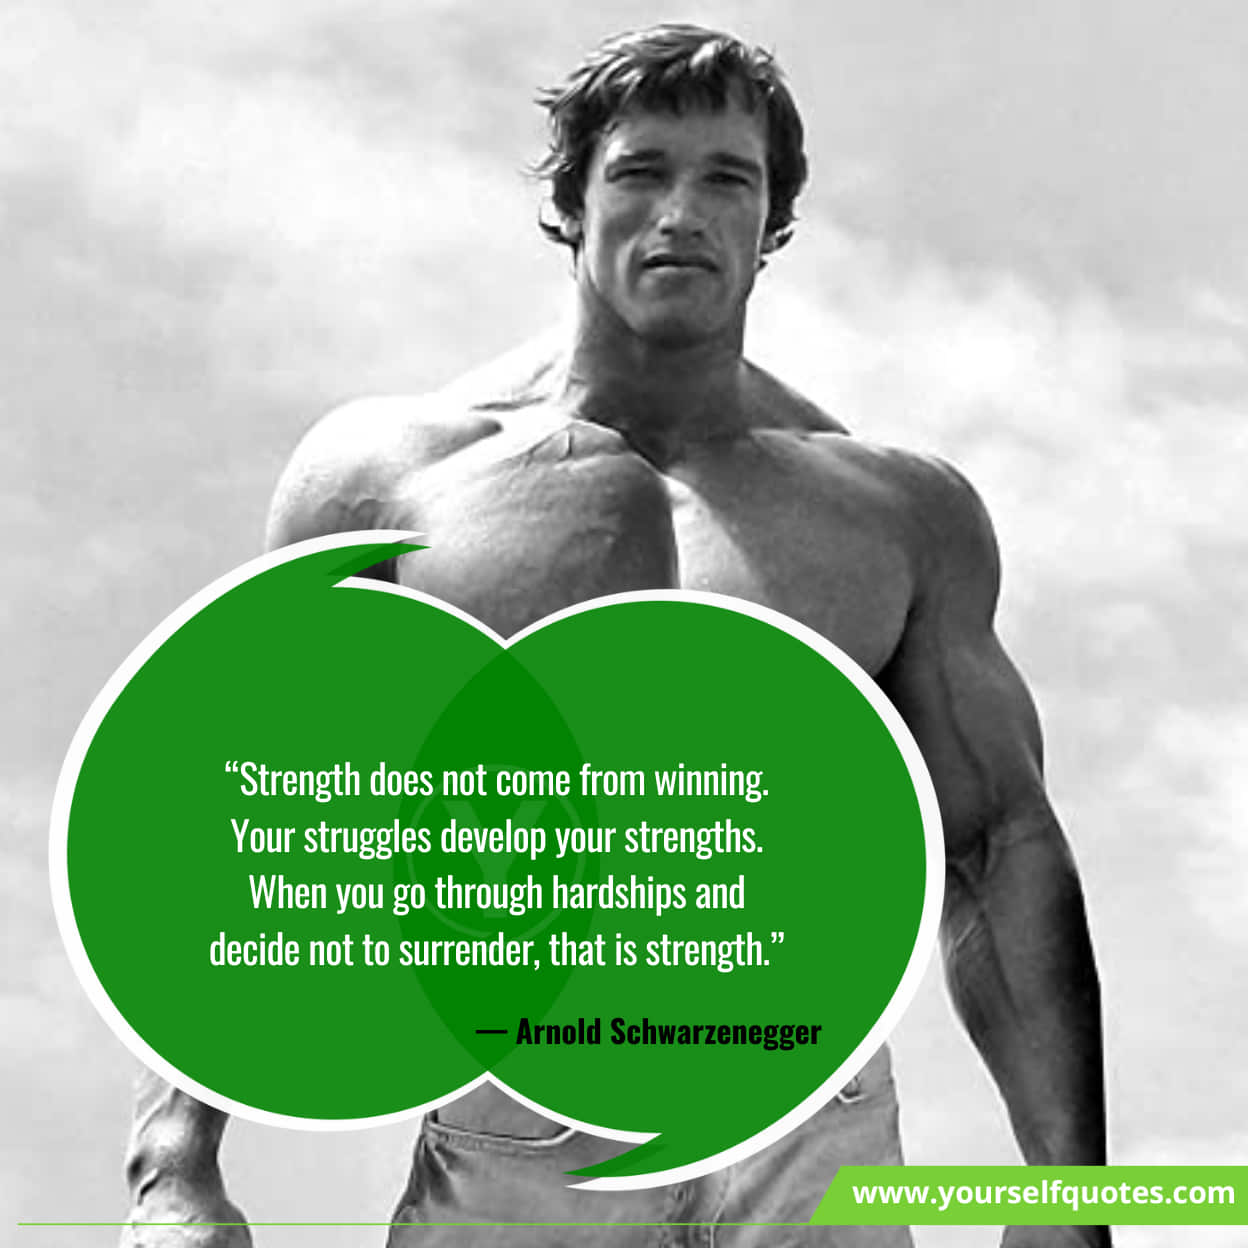 Arnold Schwarzenegger Quotes For Struggle